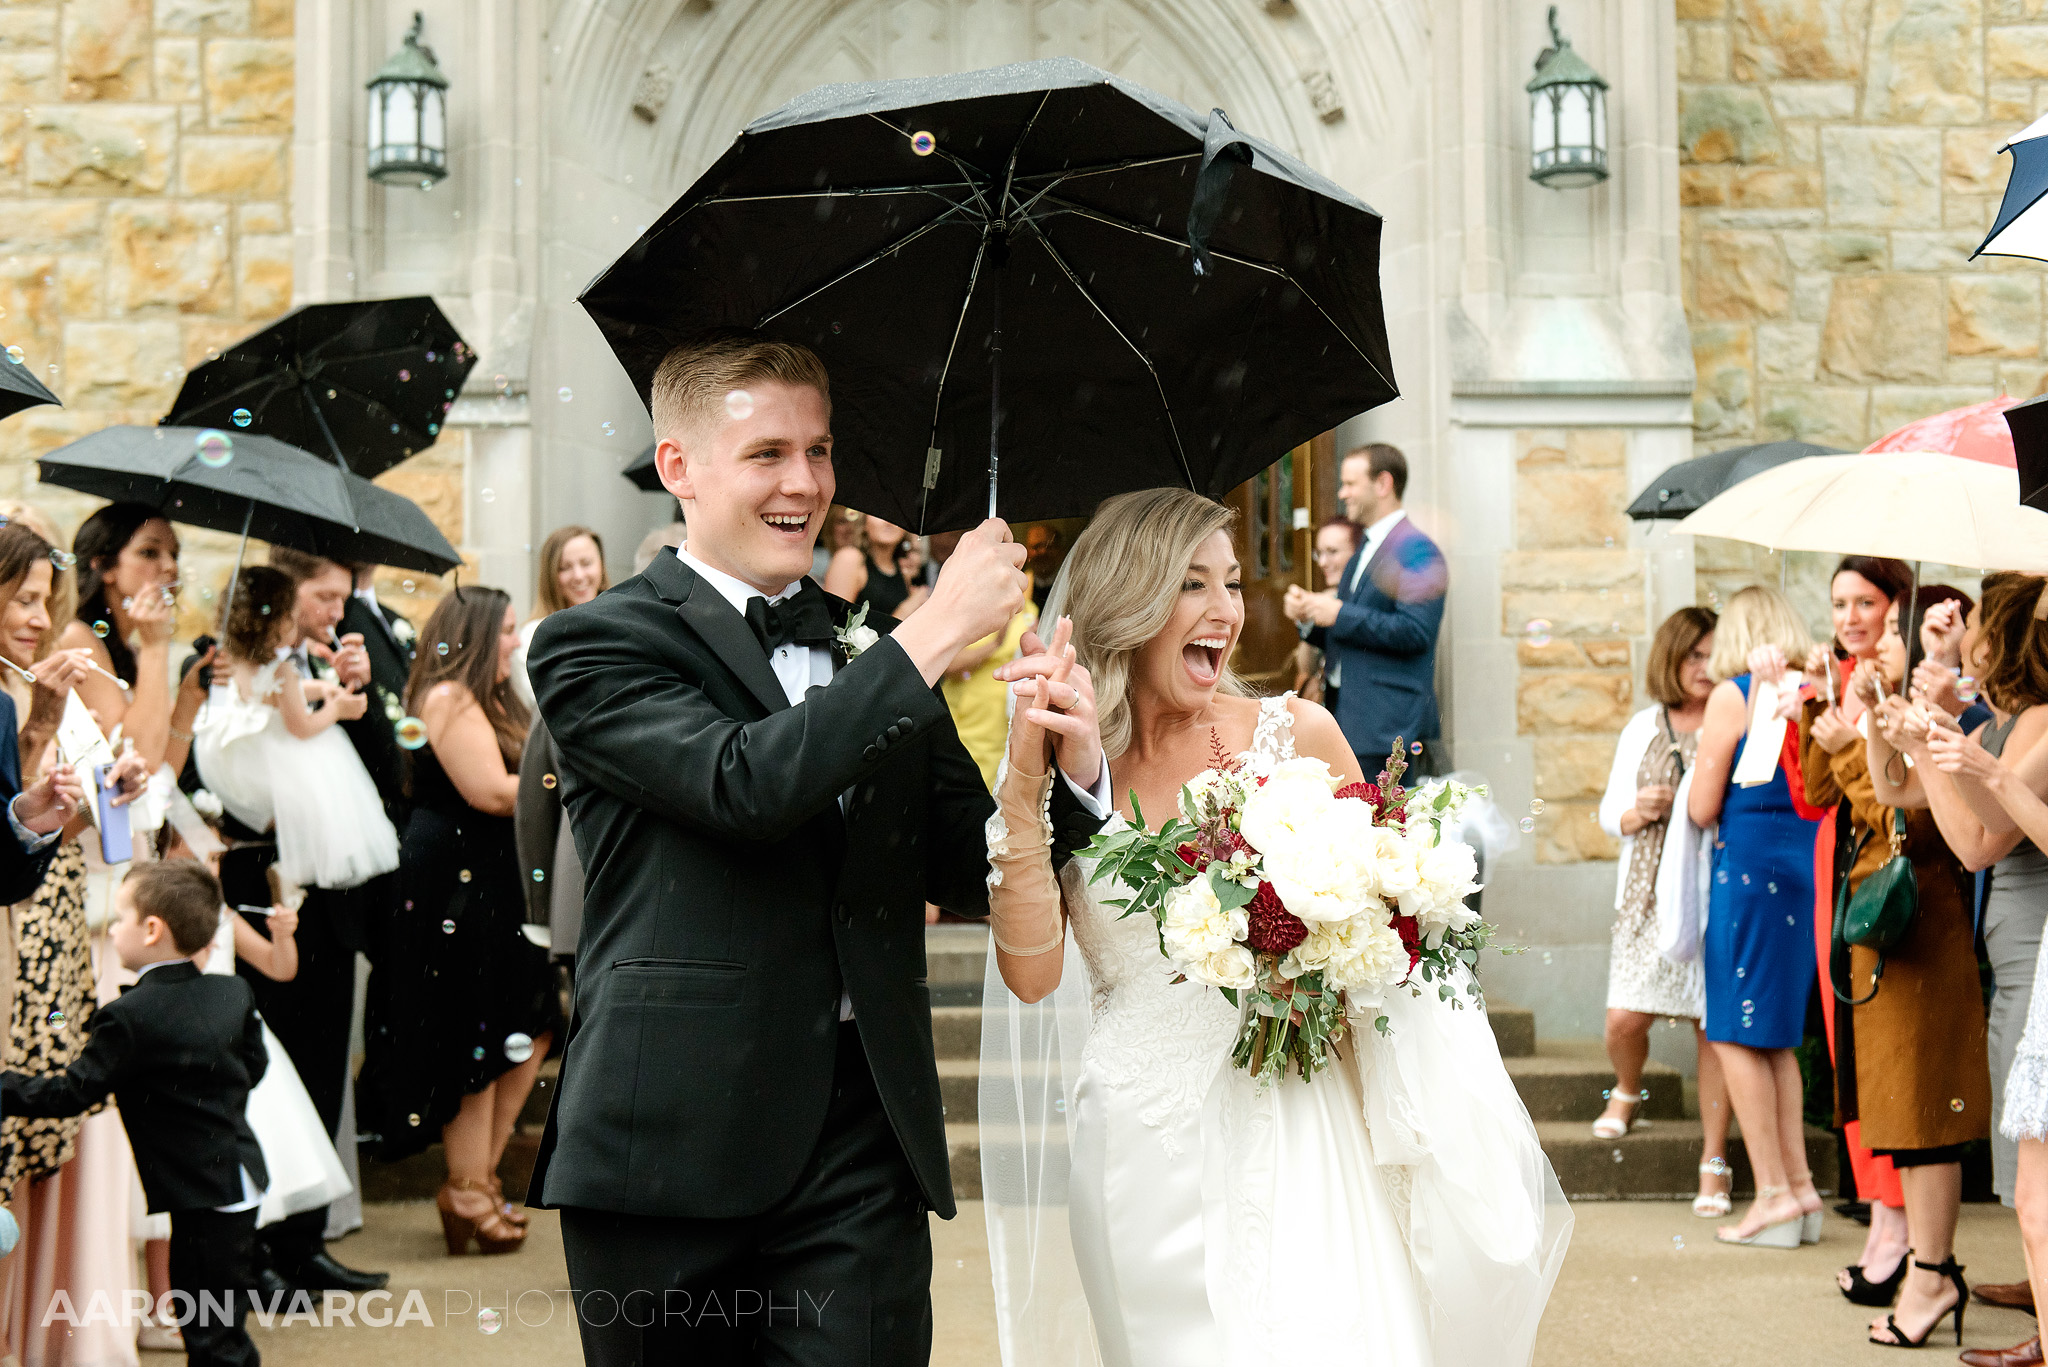 Youngstown Ohio Wedding Photographer - Sarah + Kirill | DoubleTree Hotel Youngstown Ohio Wedding Photos